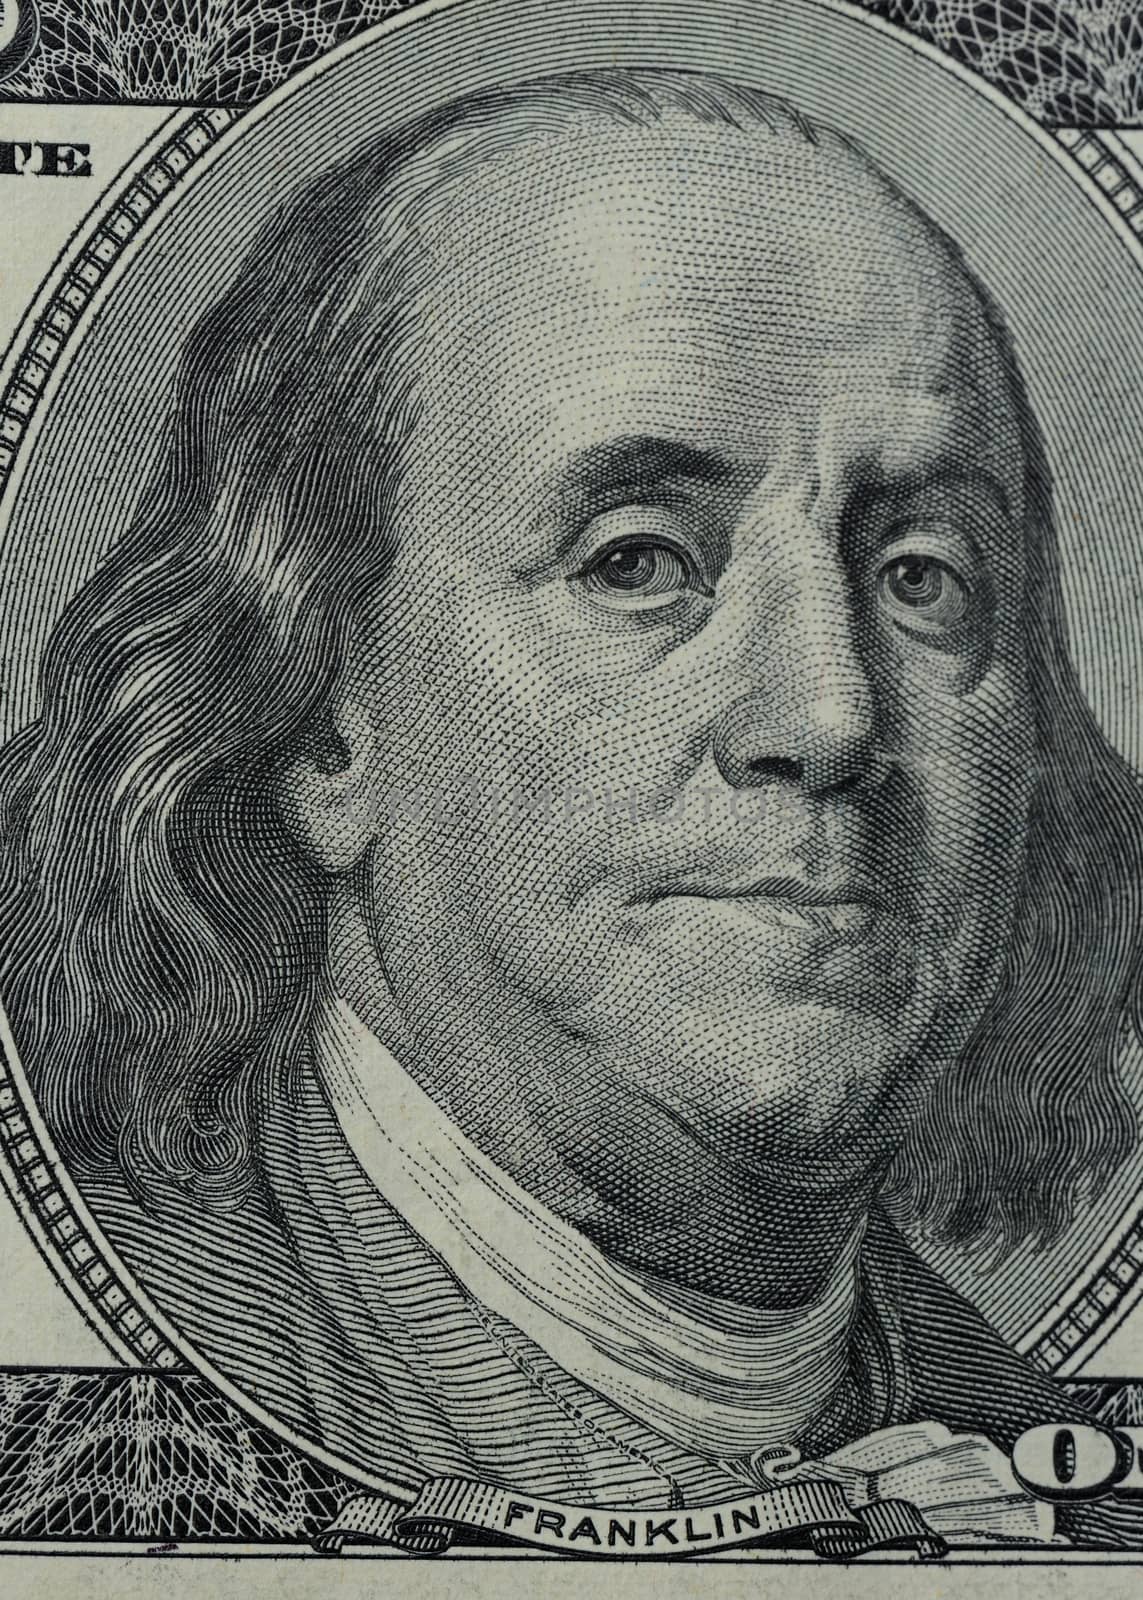 close up of Franklin on 100 dollars bill